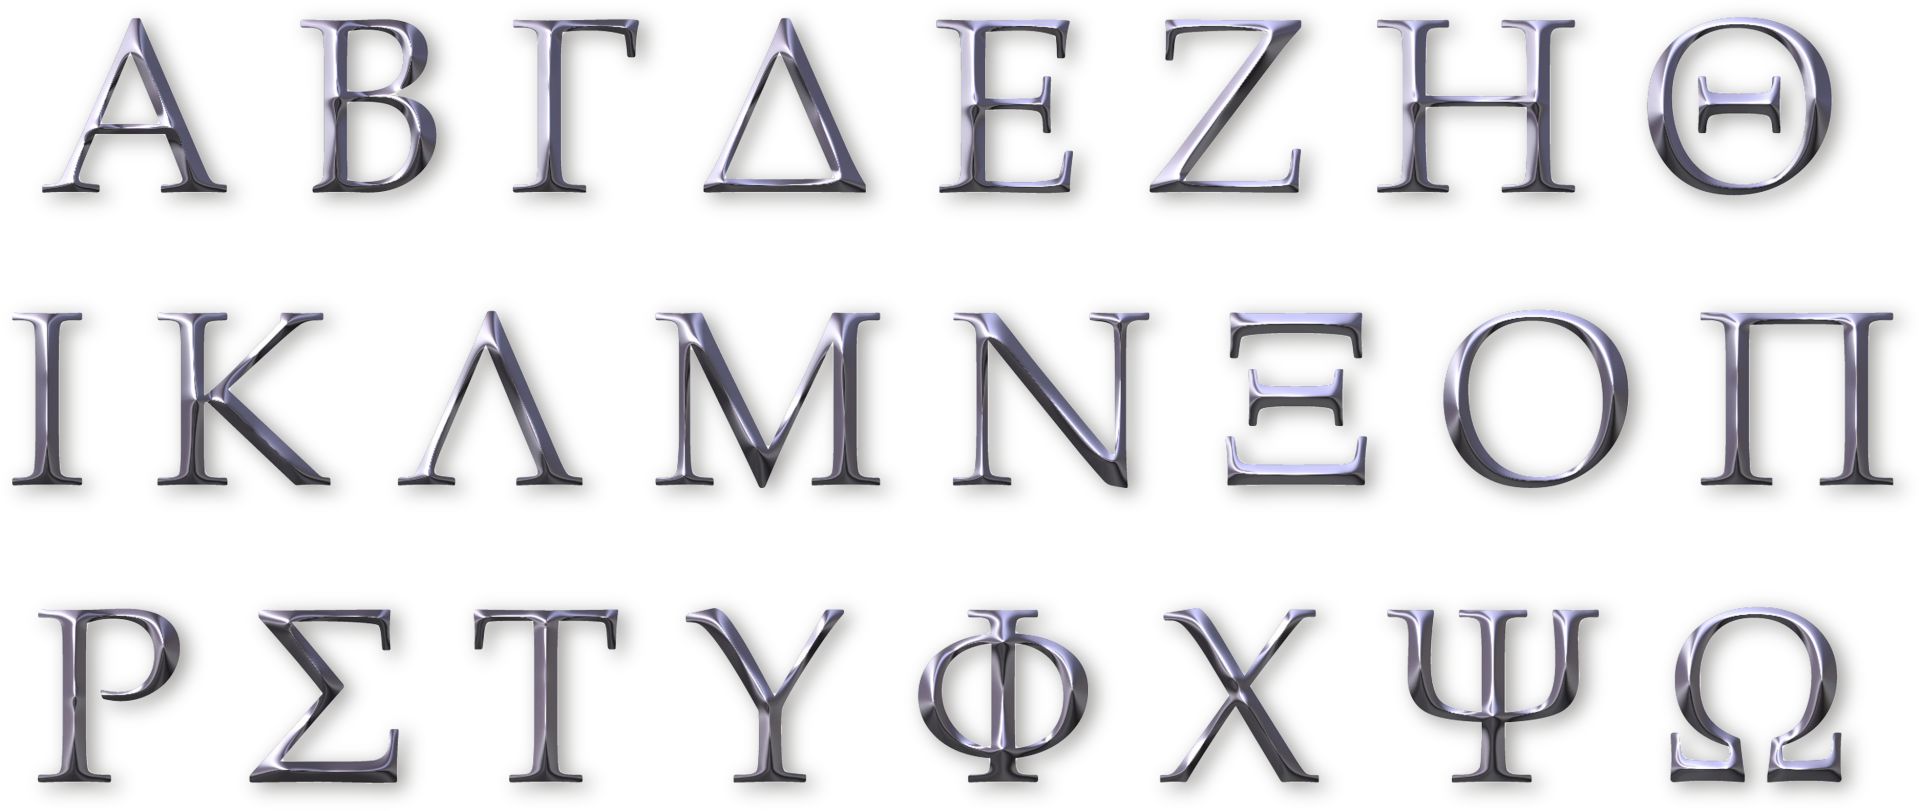 Yunani Kuno untuk Anak-Anak: Alfabet dan Huruf Yunani